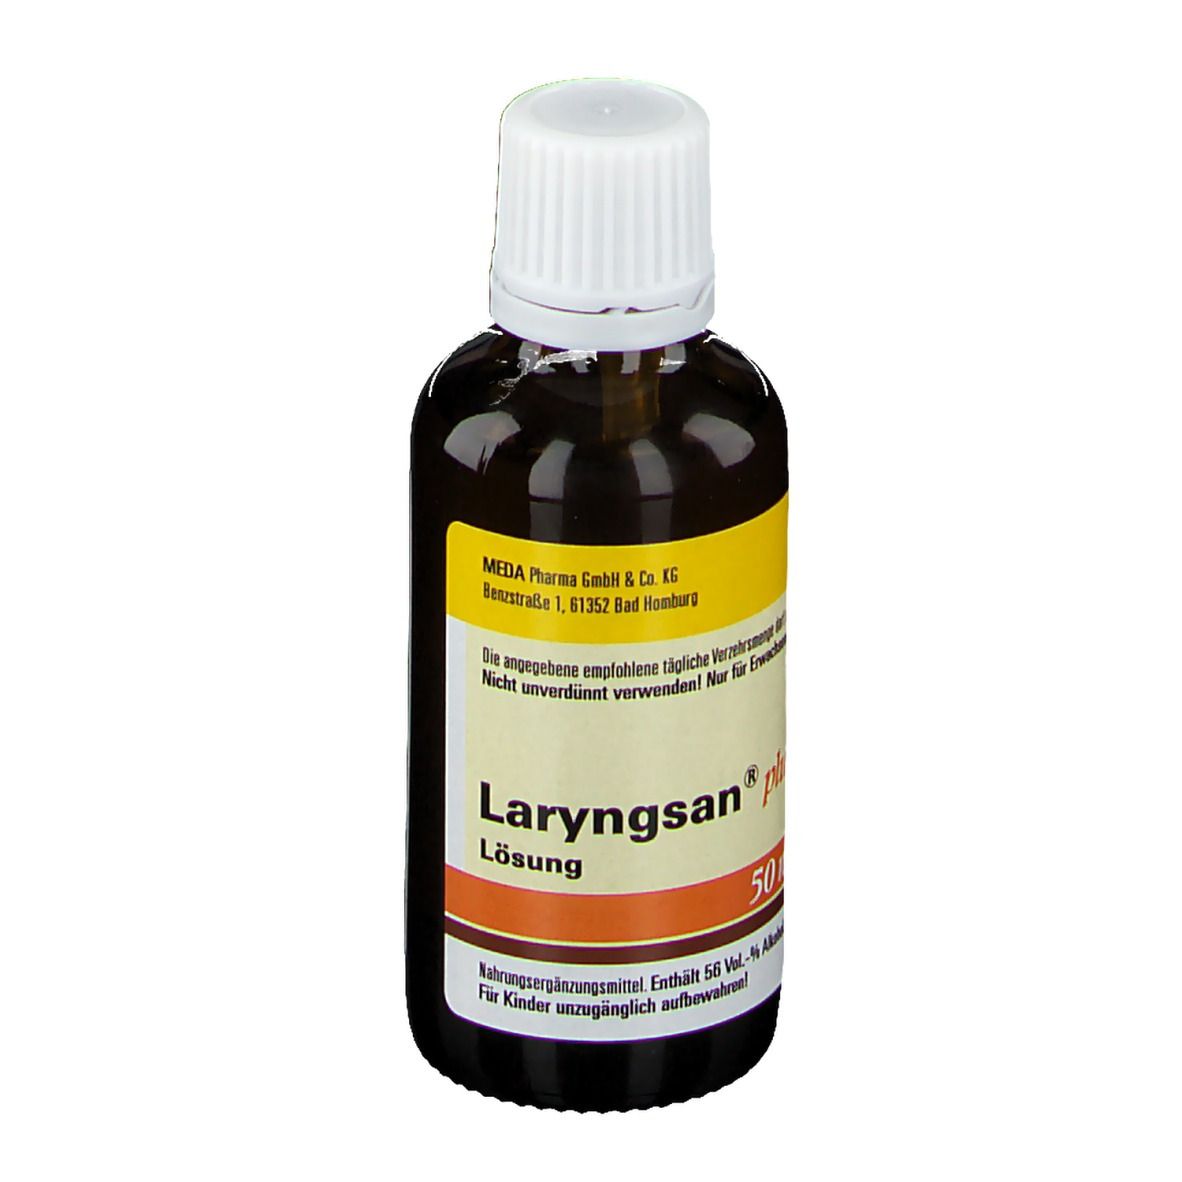 Laryngsan® plus zinc solution